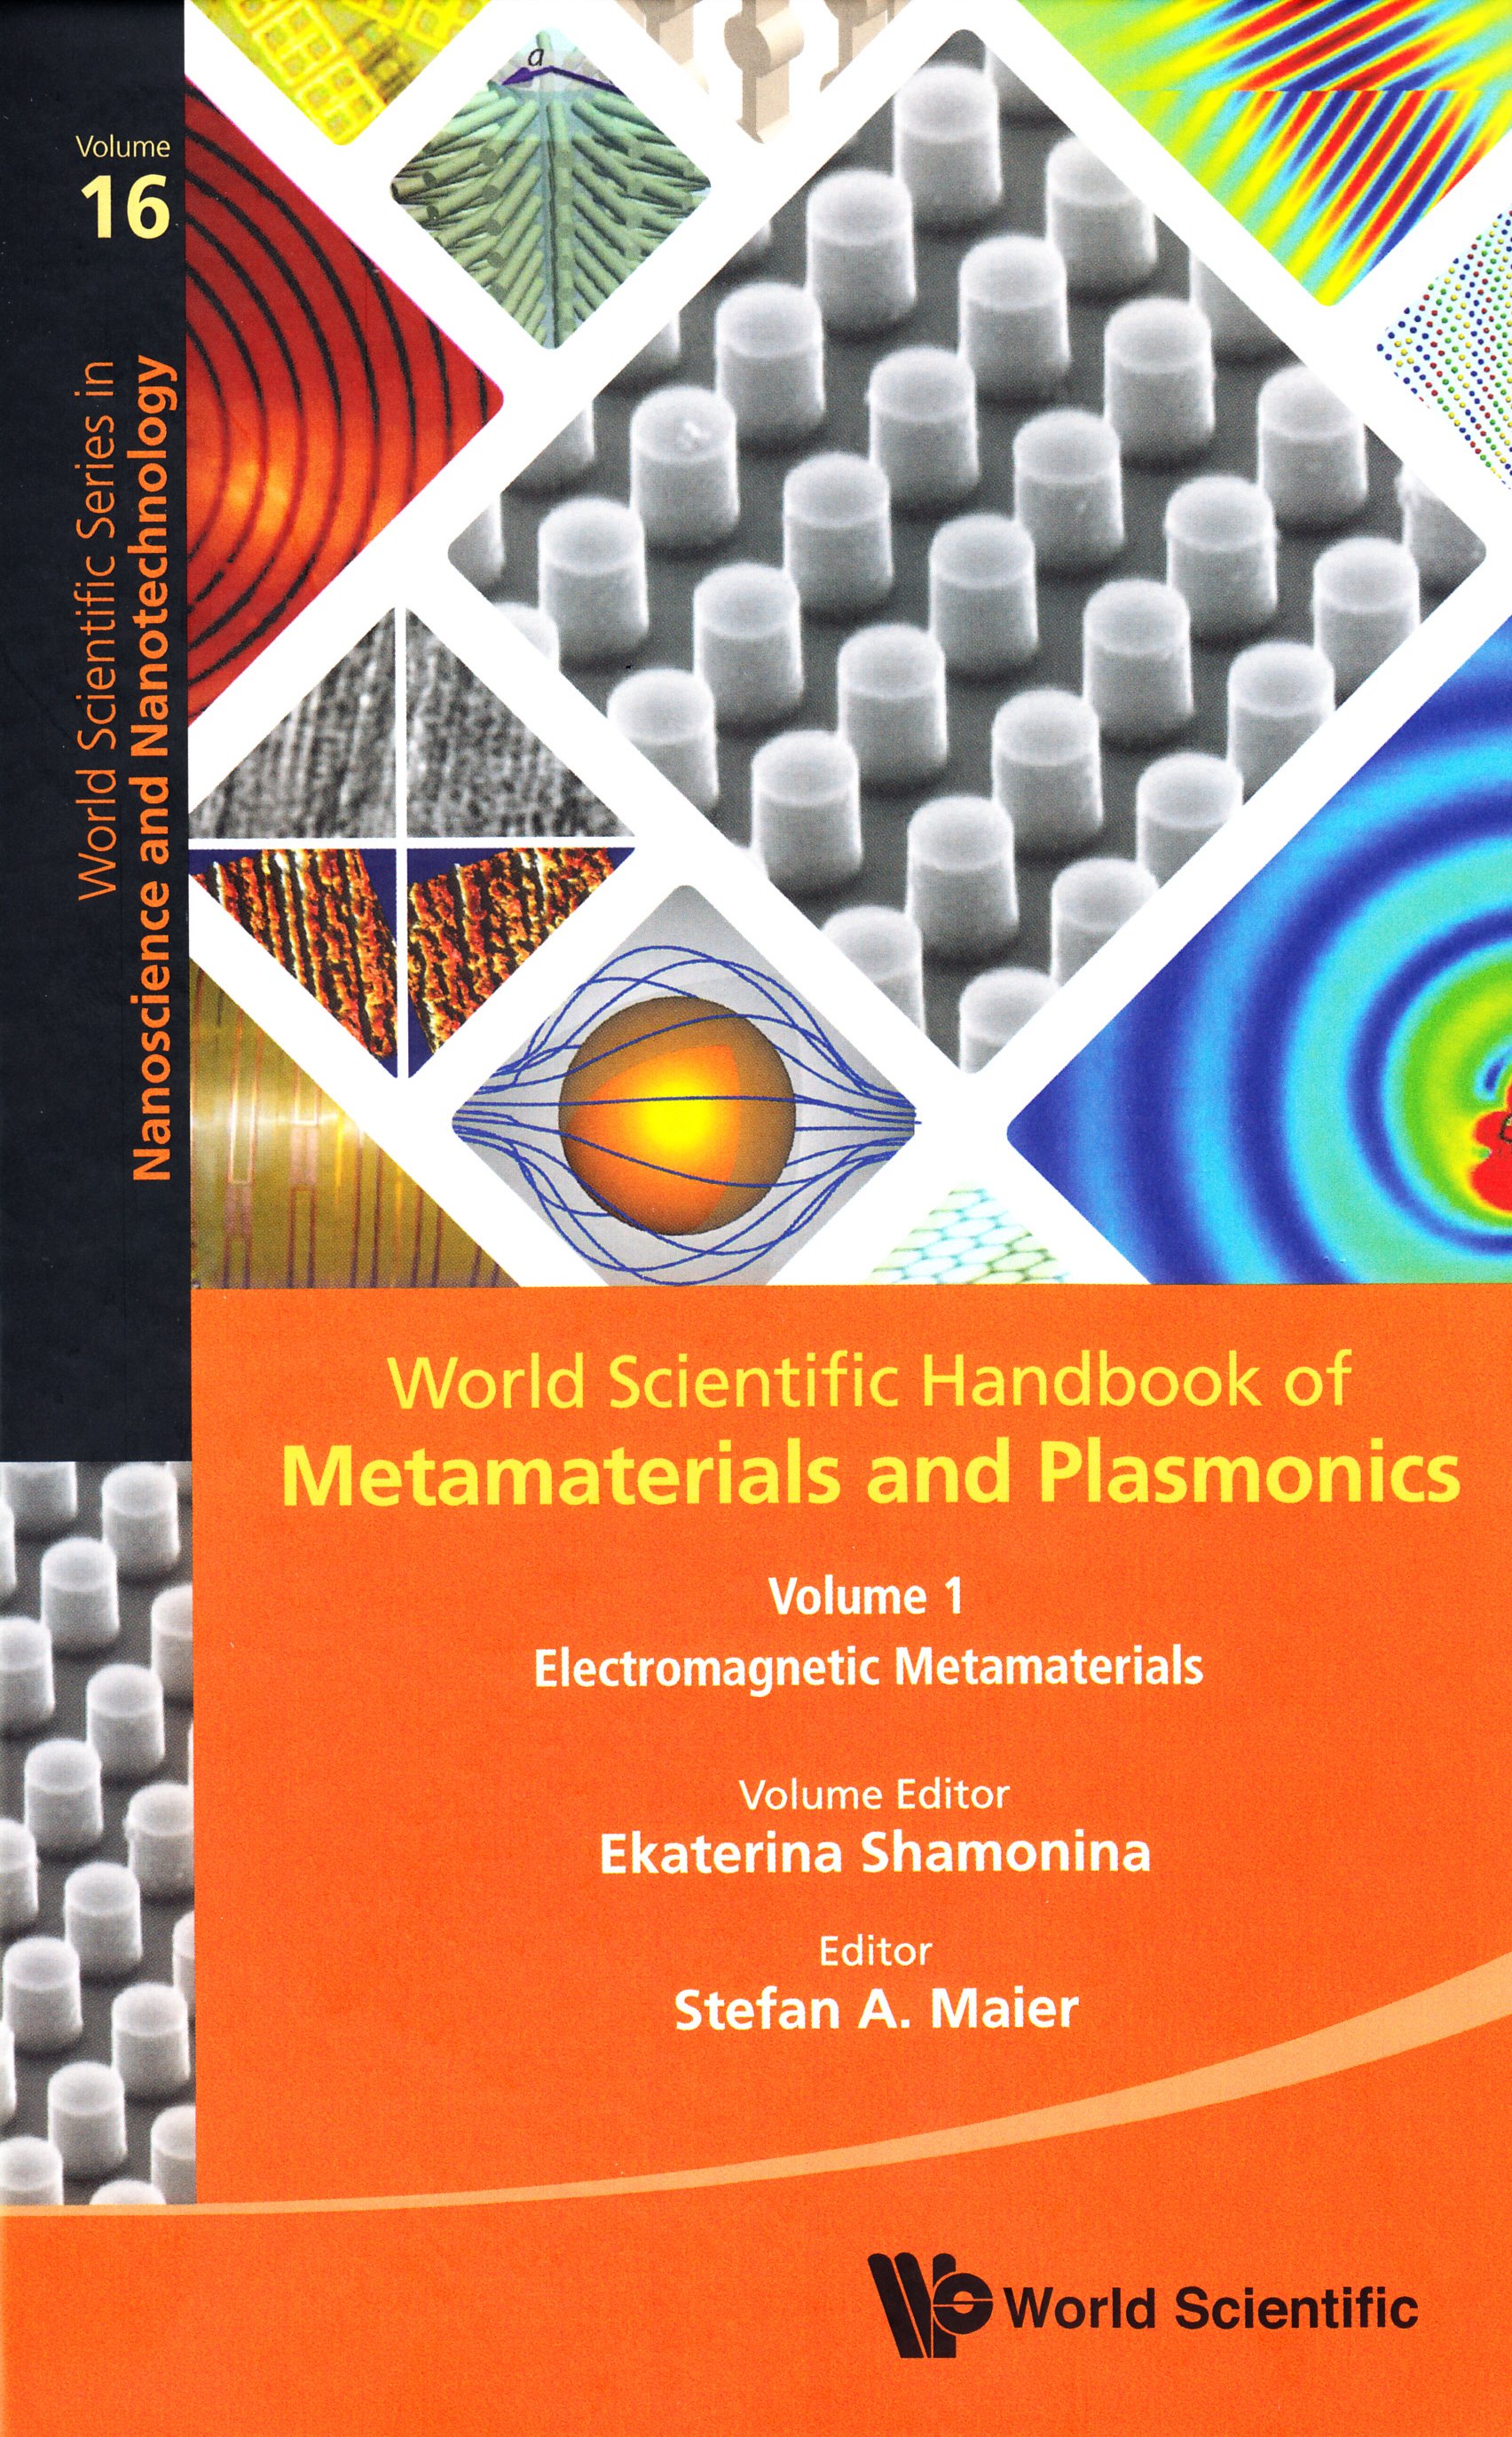  World Scientific Handbook of Metamaterials and Plasmonics, vol. 1: Electromagnetic Metamaterials